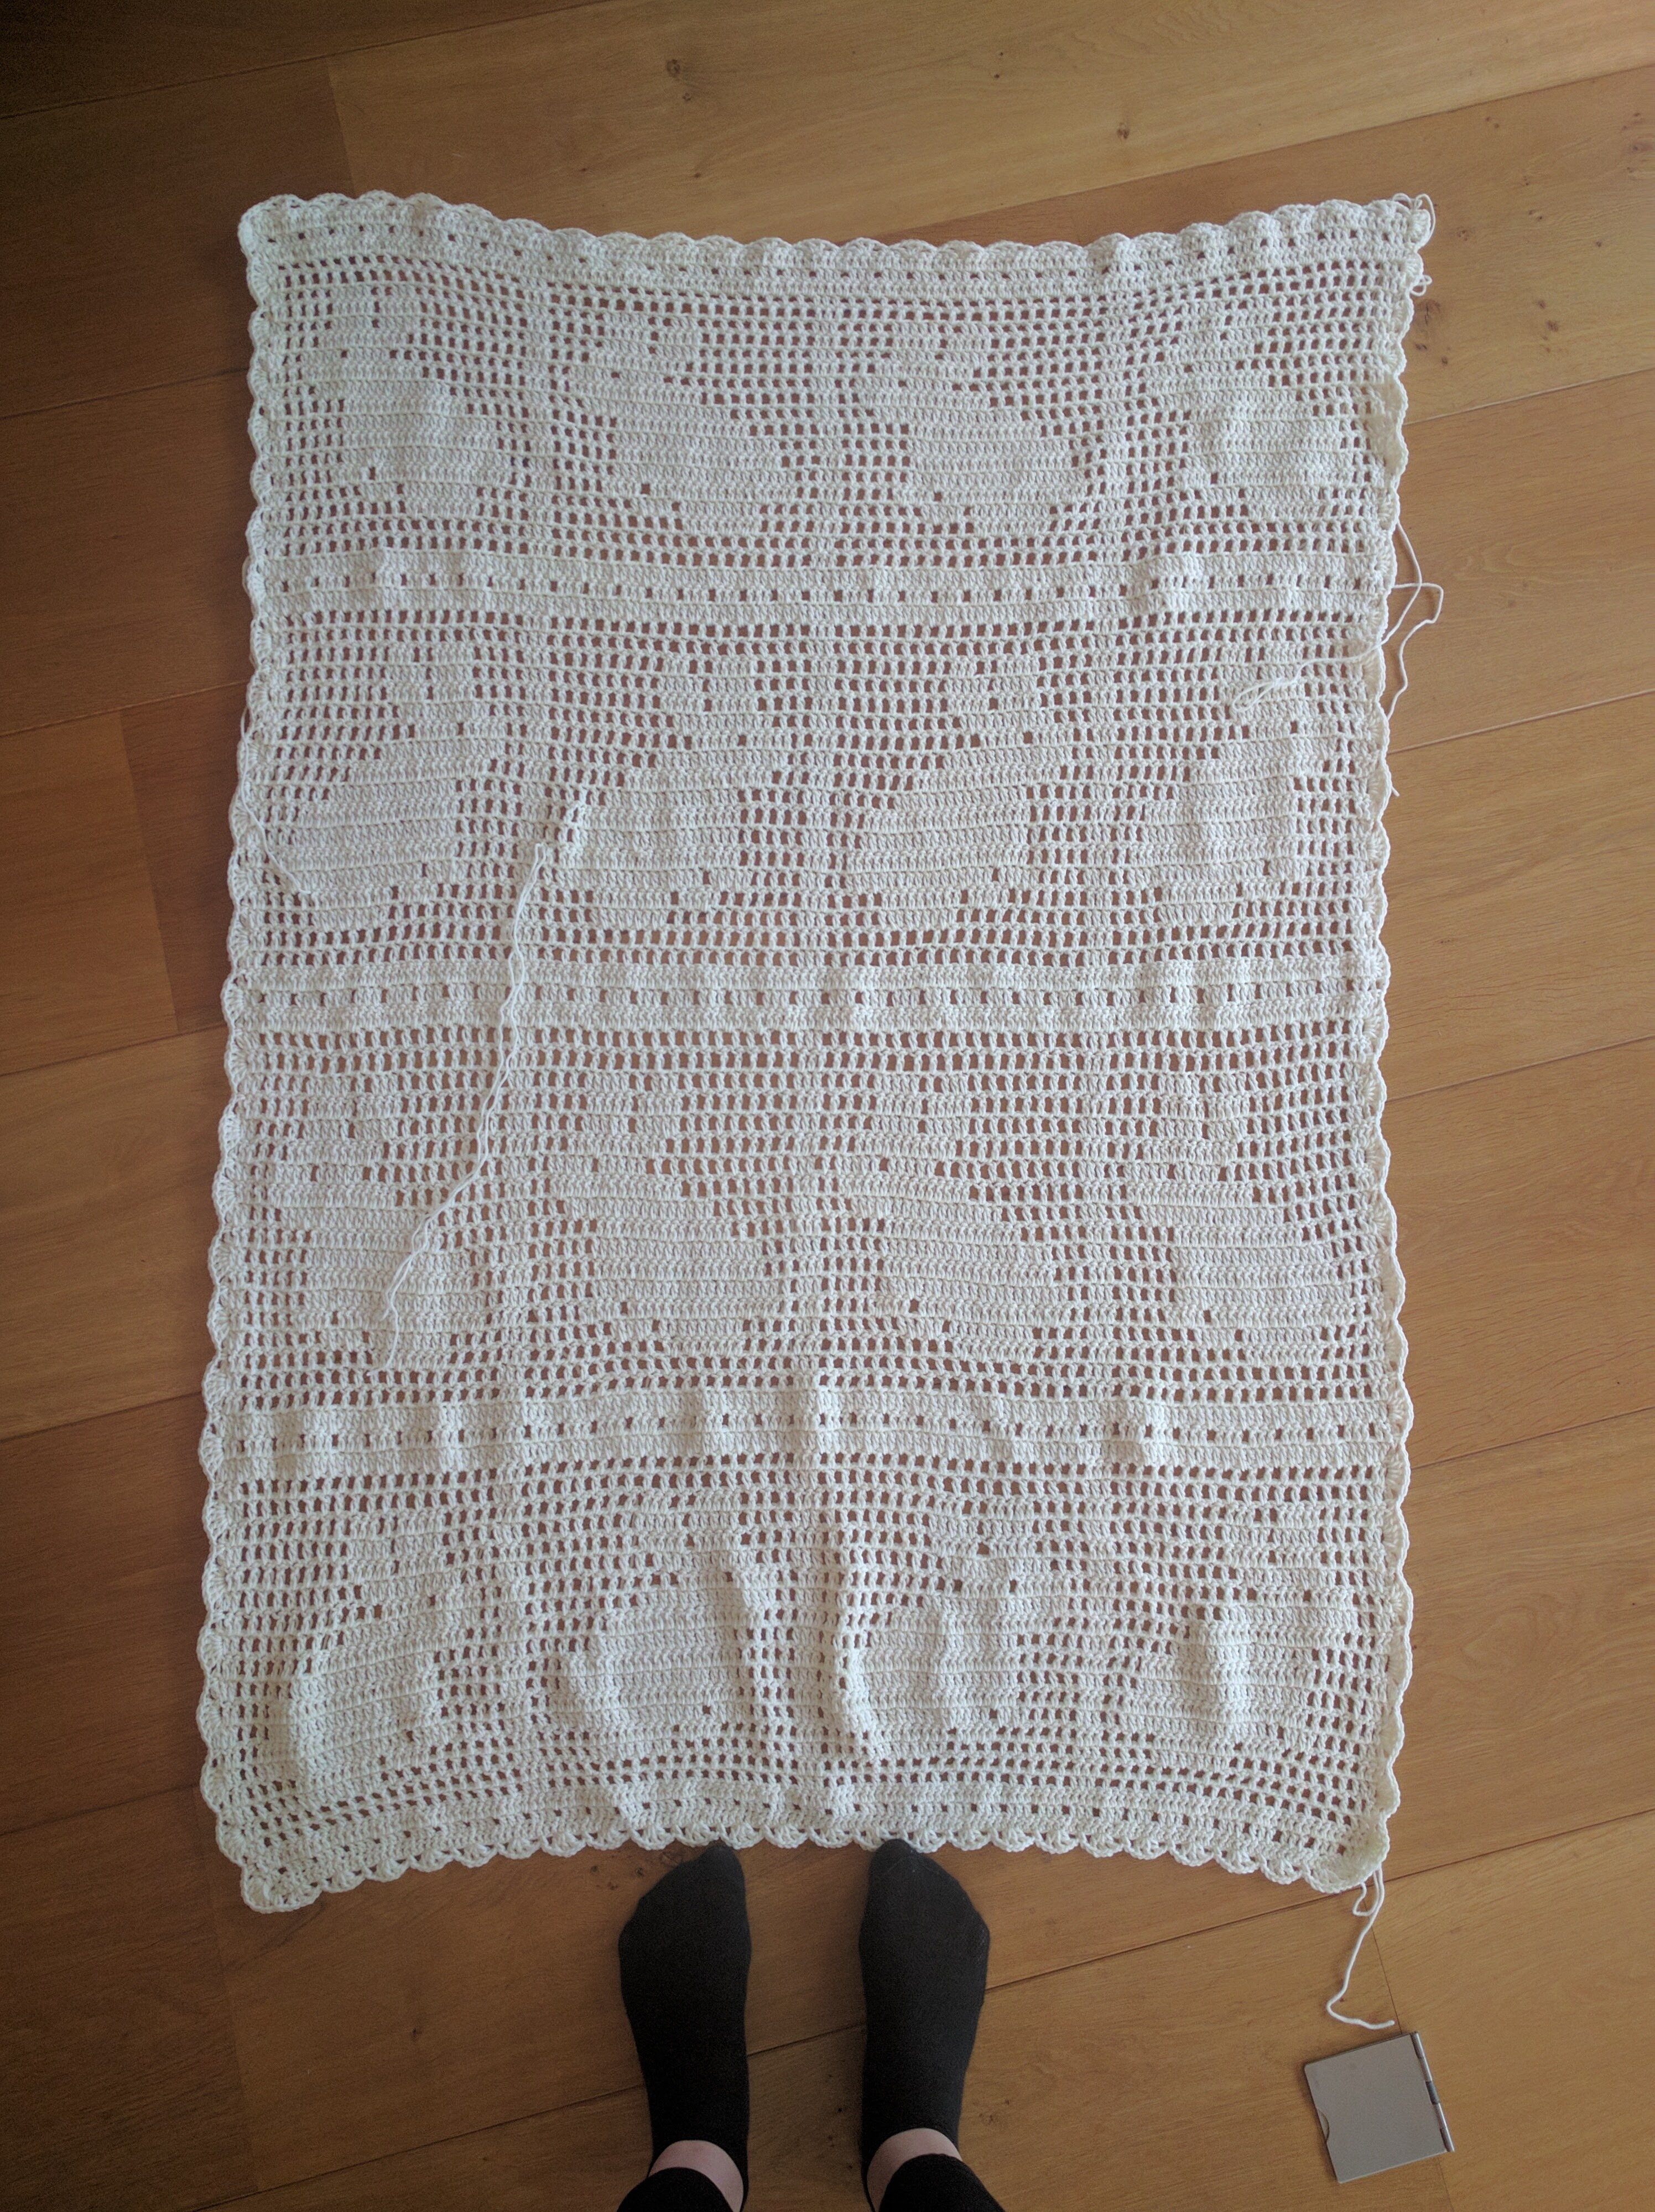 Filet Crochet Afghan Patterns Filet Crochet Bunny Blanket For A Beautiful Ba Hook Knit And